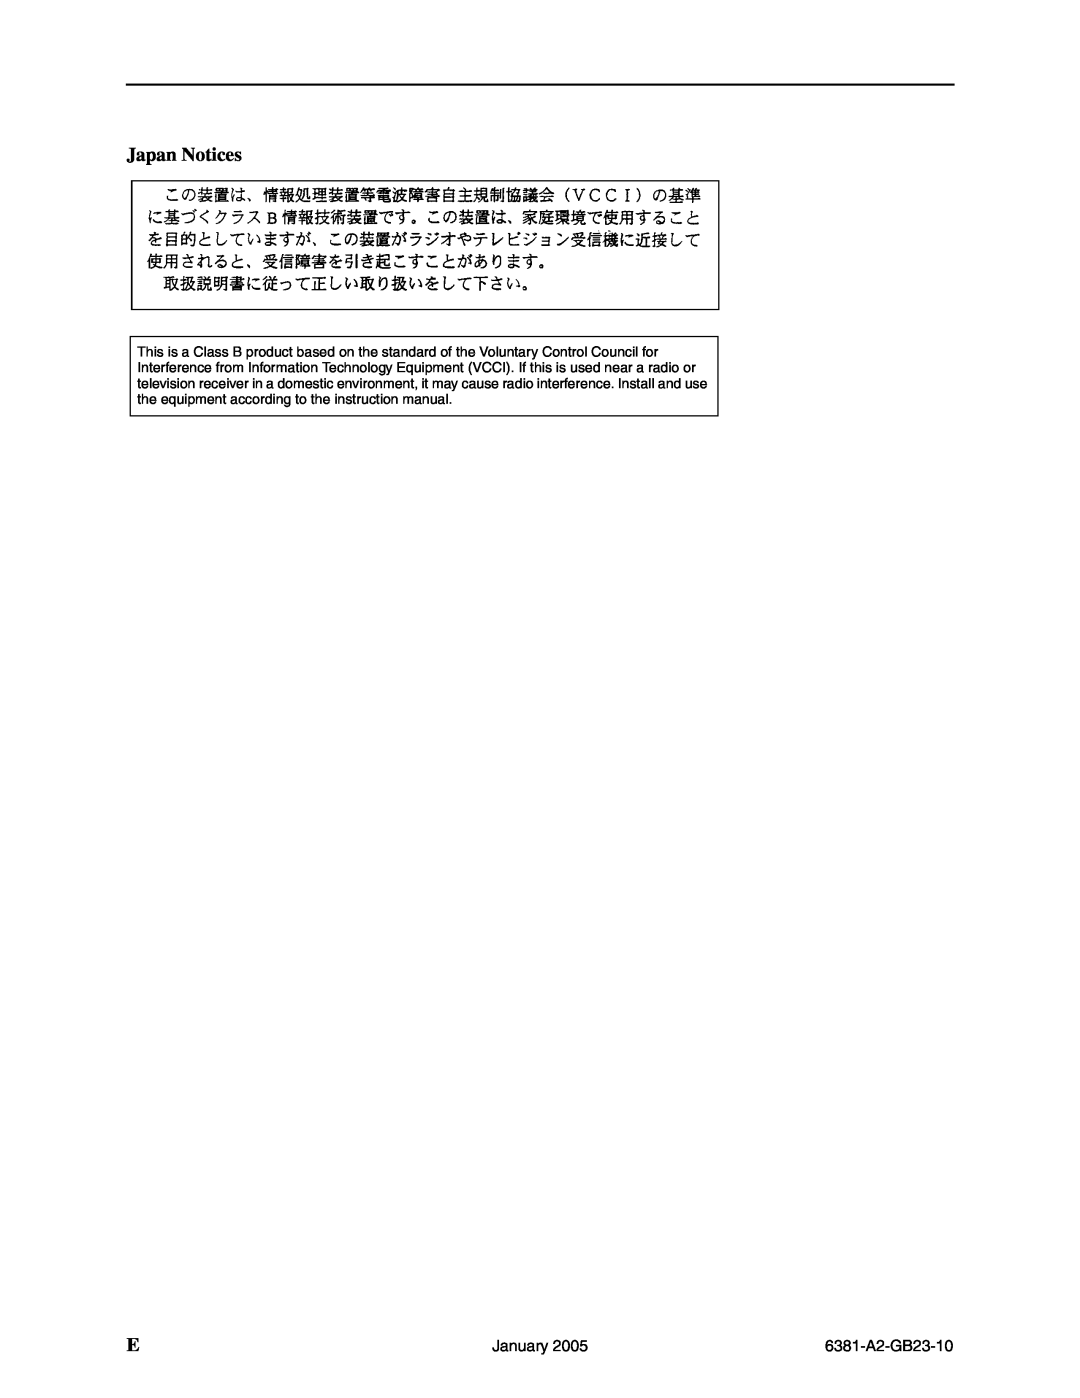 Paradyne 6381-A3 manual Japan Notices, January, 6381-A2-GB23-10 